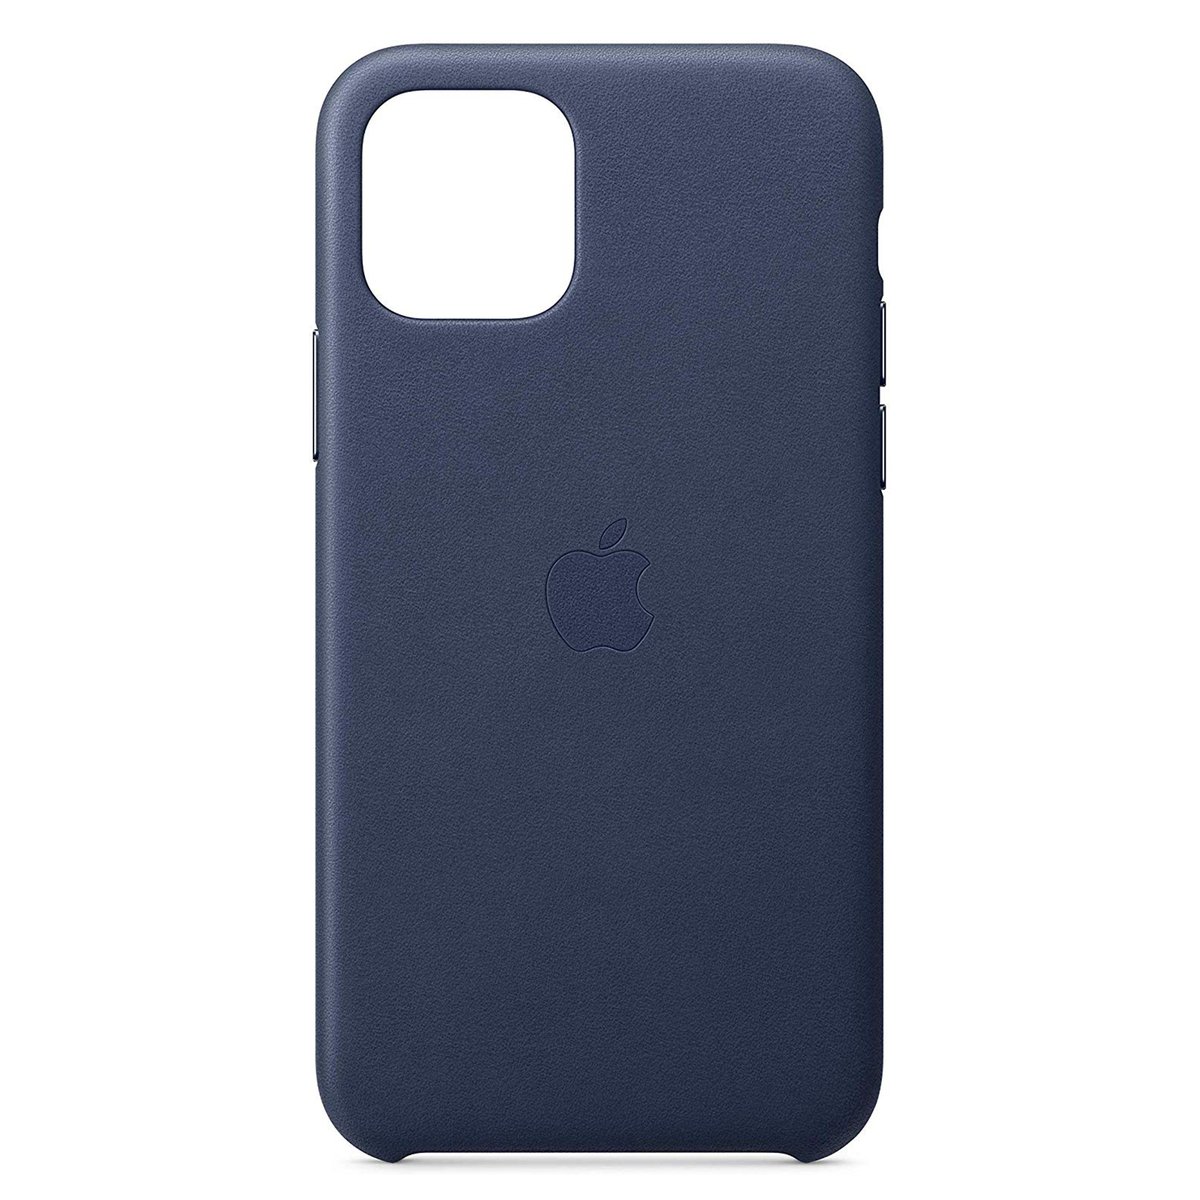 iPhone 11 Pro Leather Case MWYG2ZM Midnight Blue